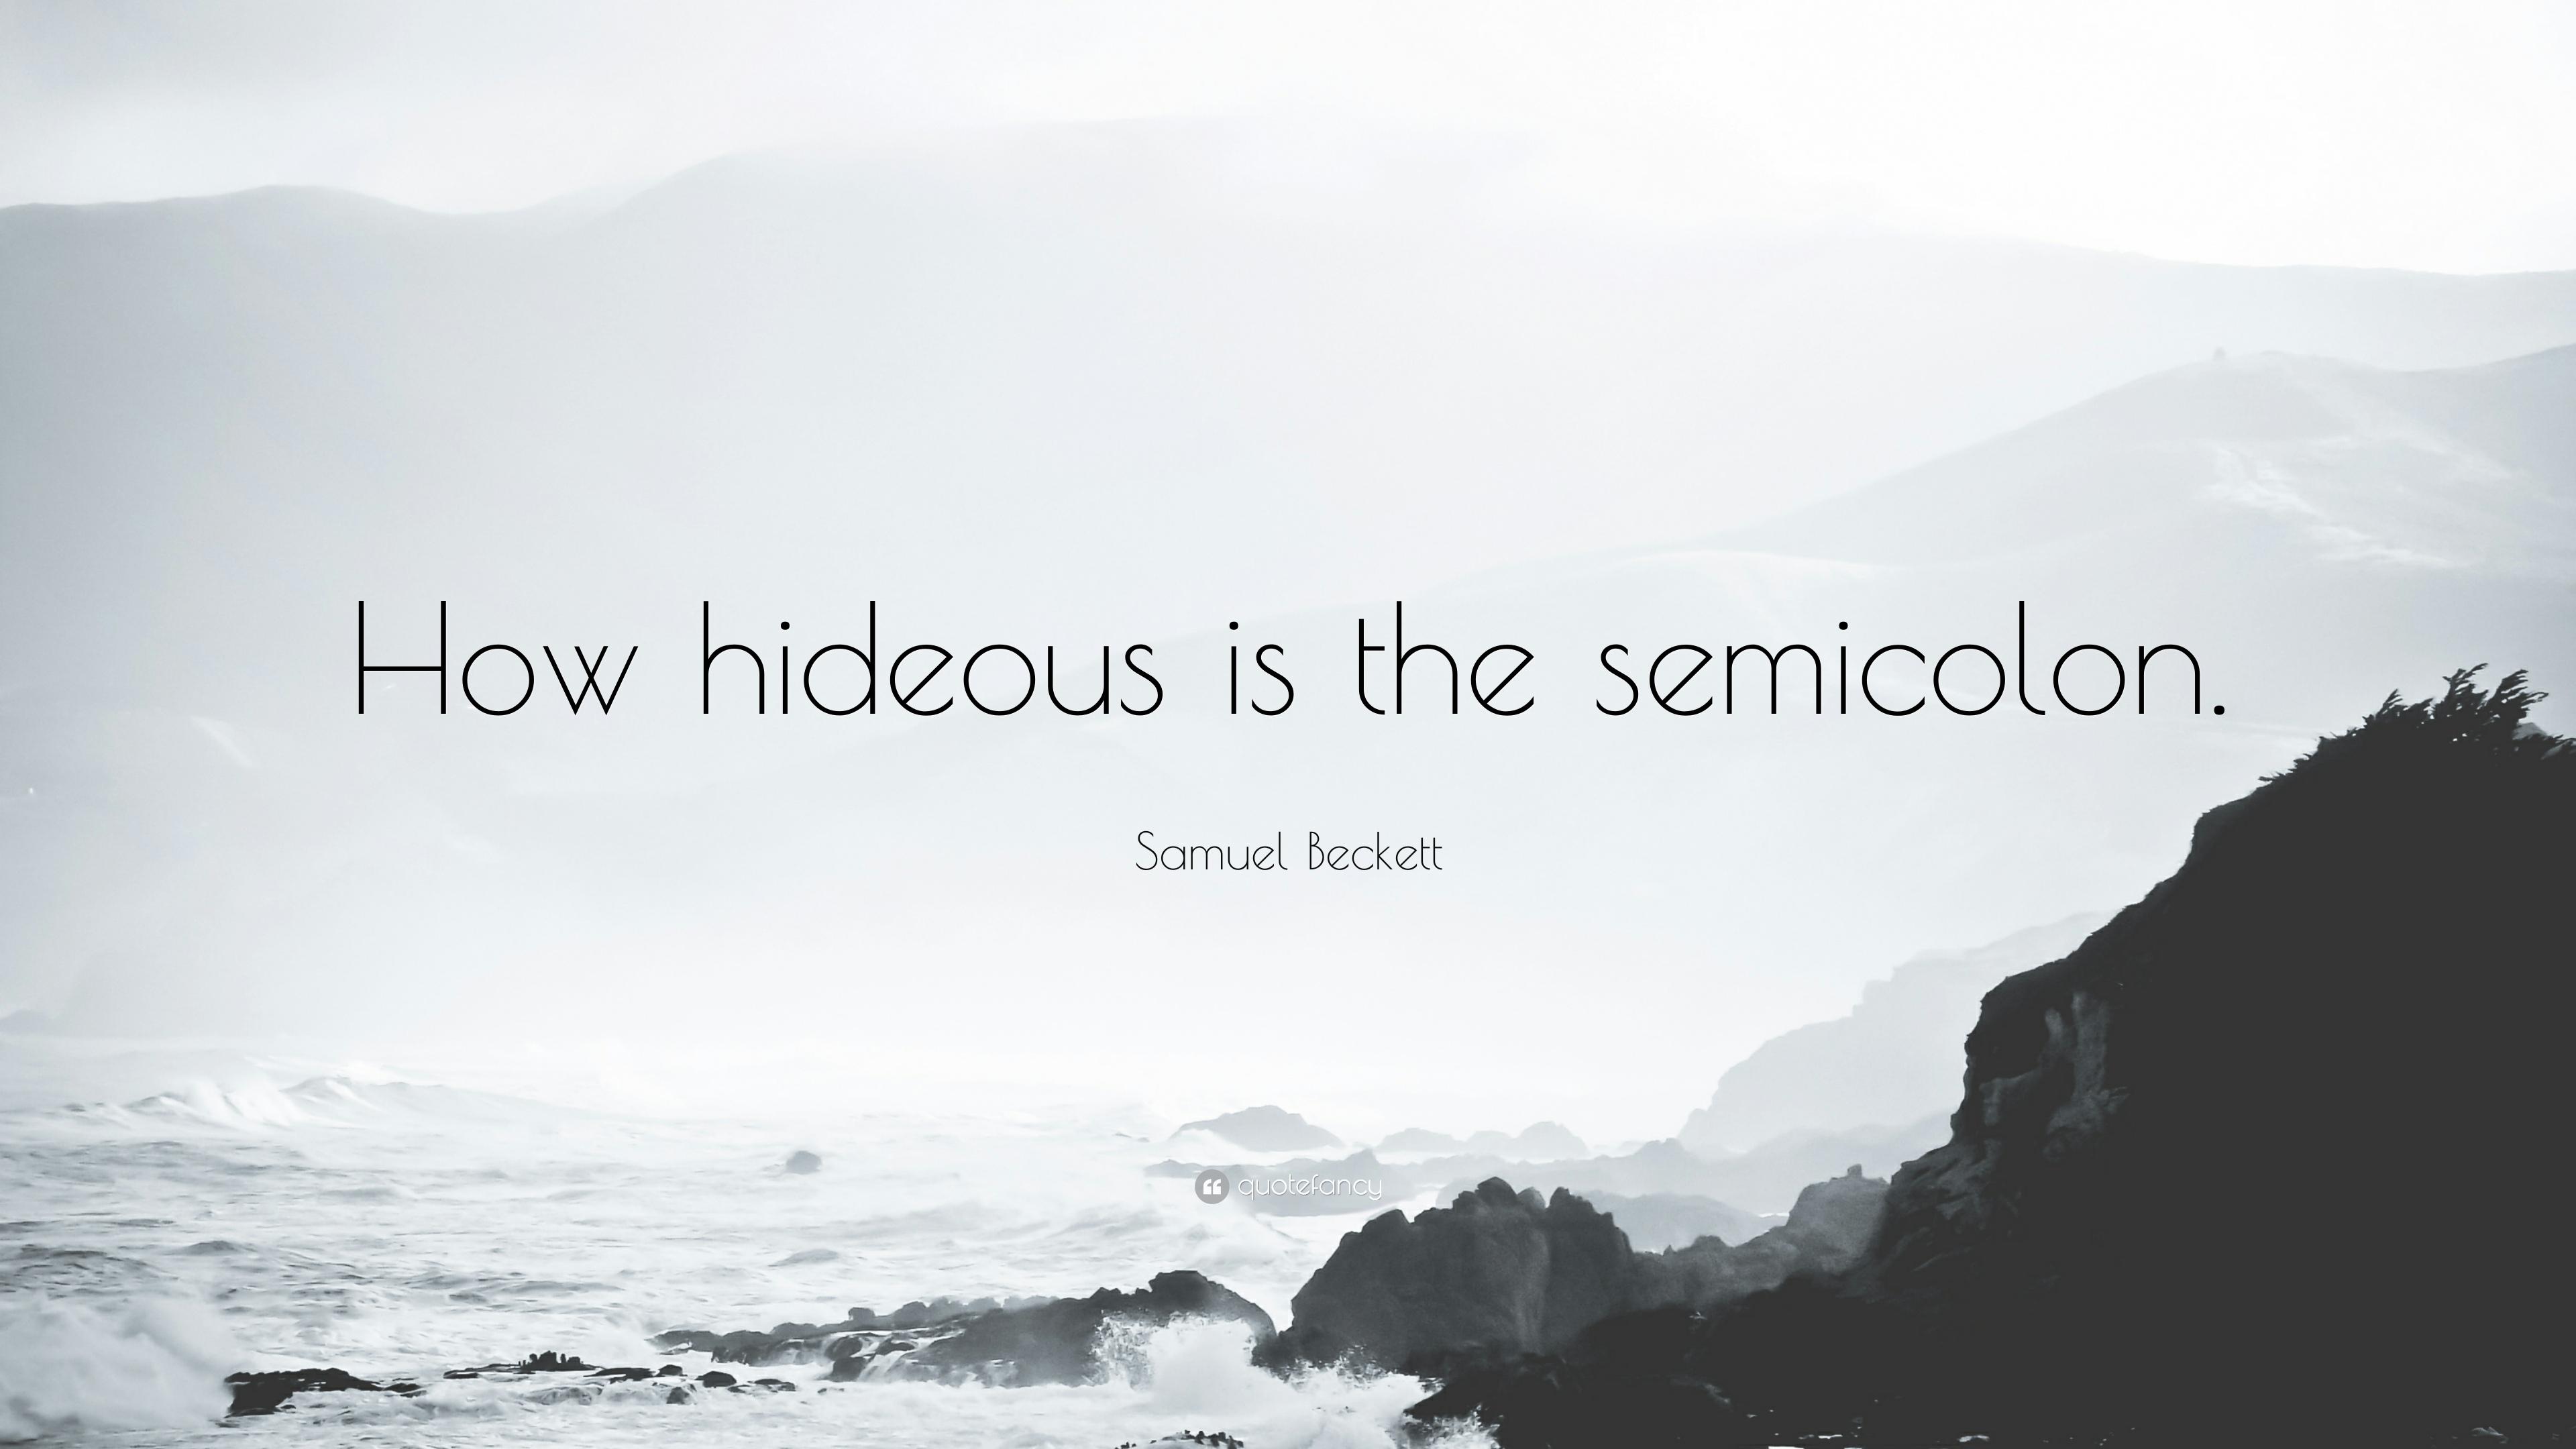 Samuel Beckett Quote: “How hideous is the semicolon.” 12 wallpaper